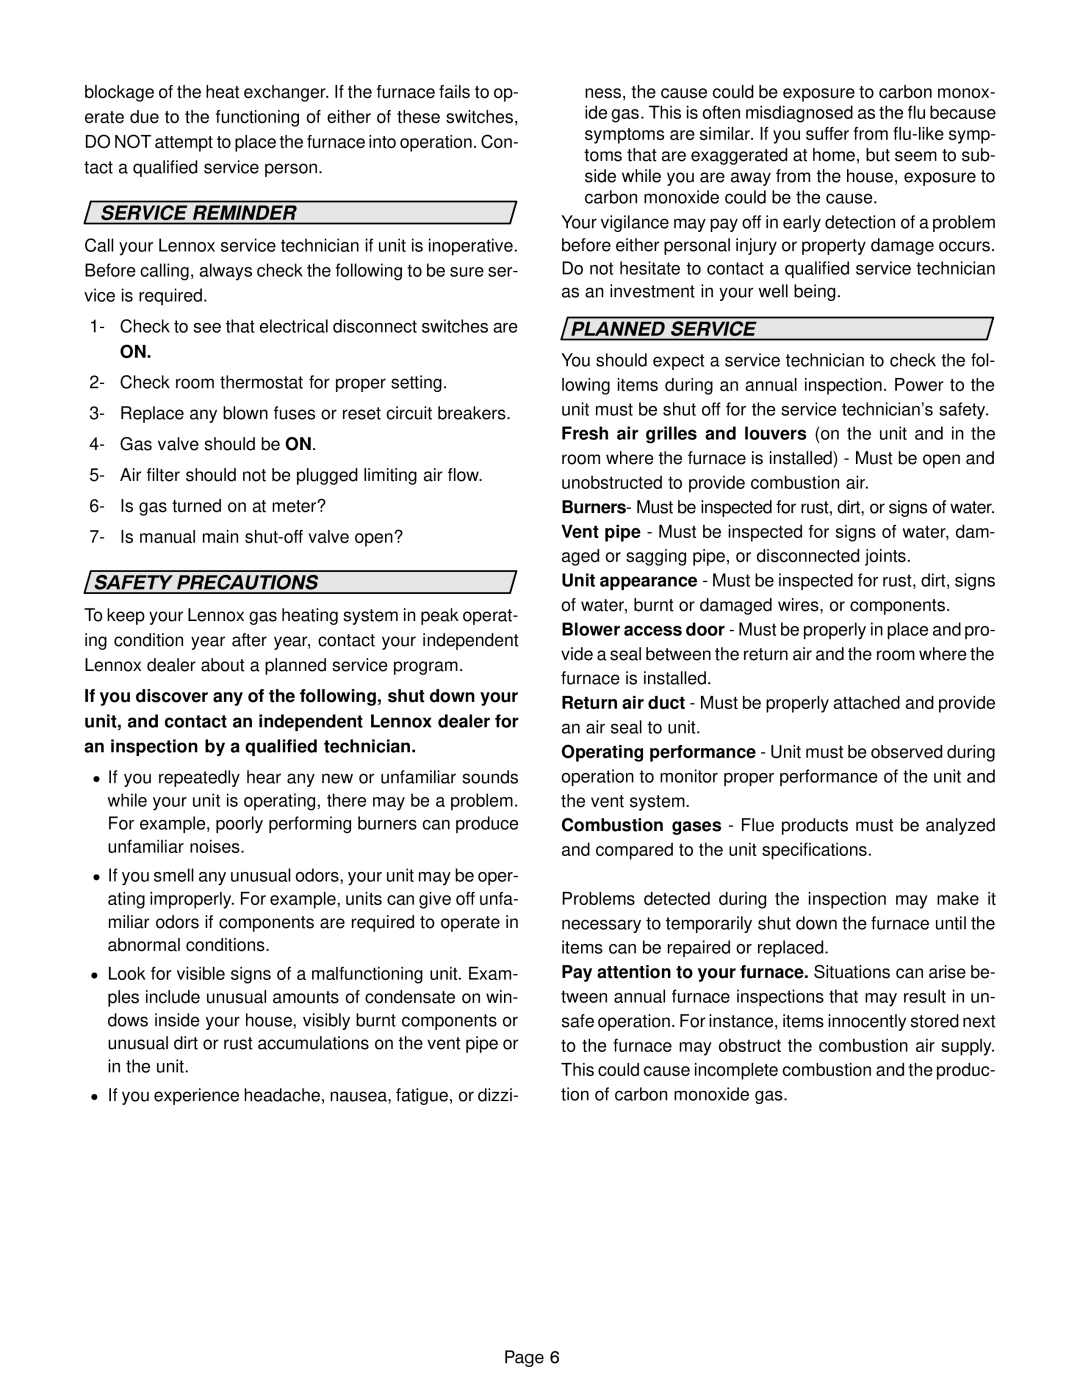 Lennox International Inc G20 manual 3DJH, Service Reminder 